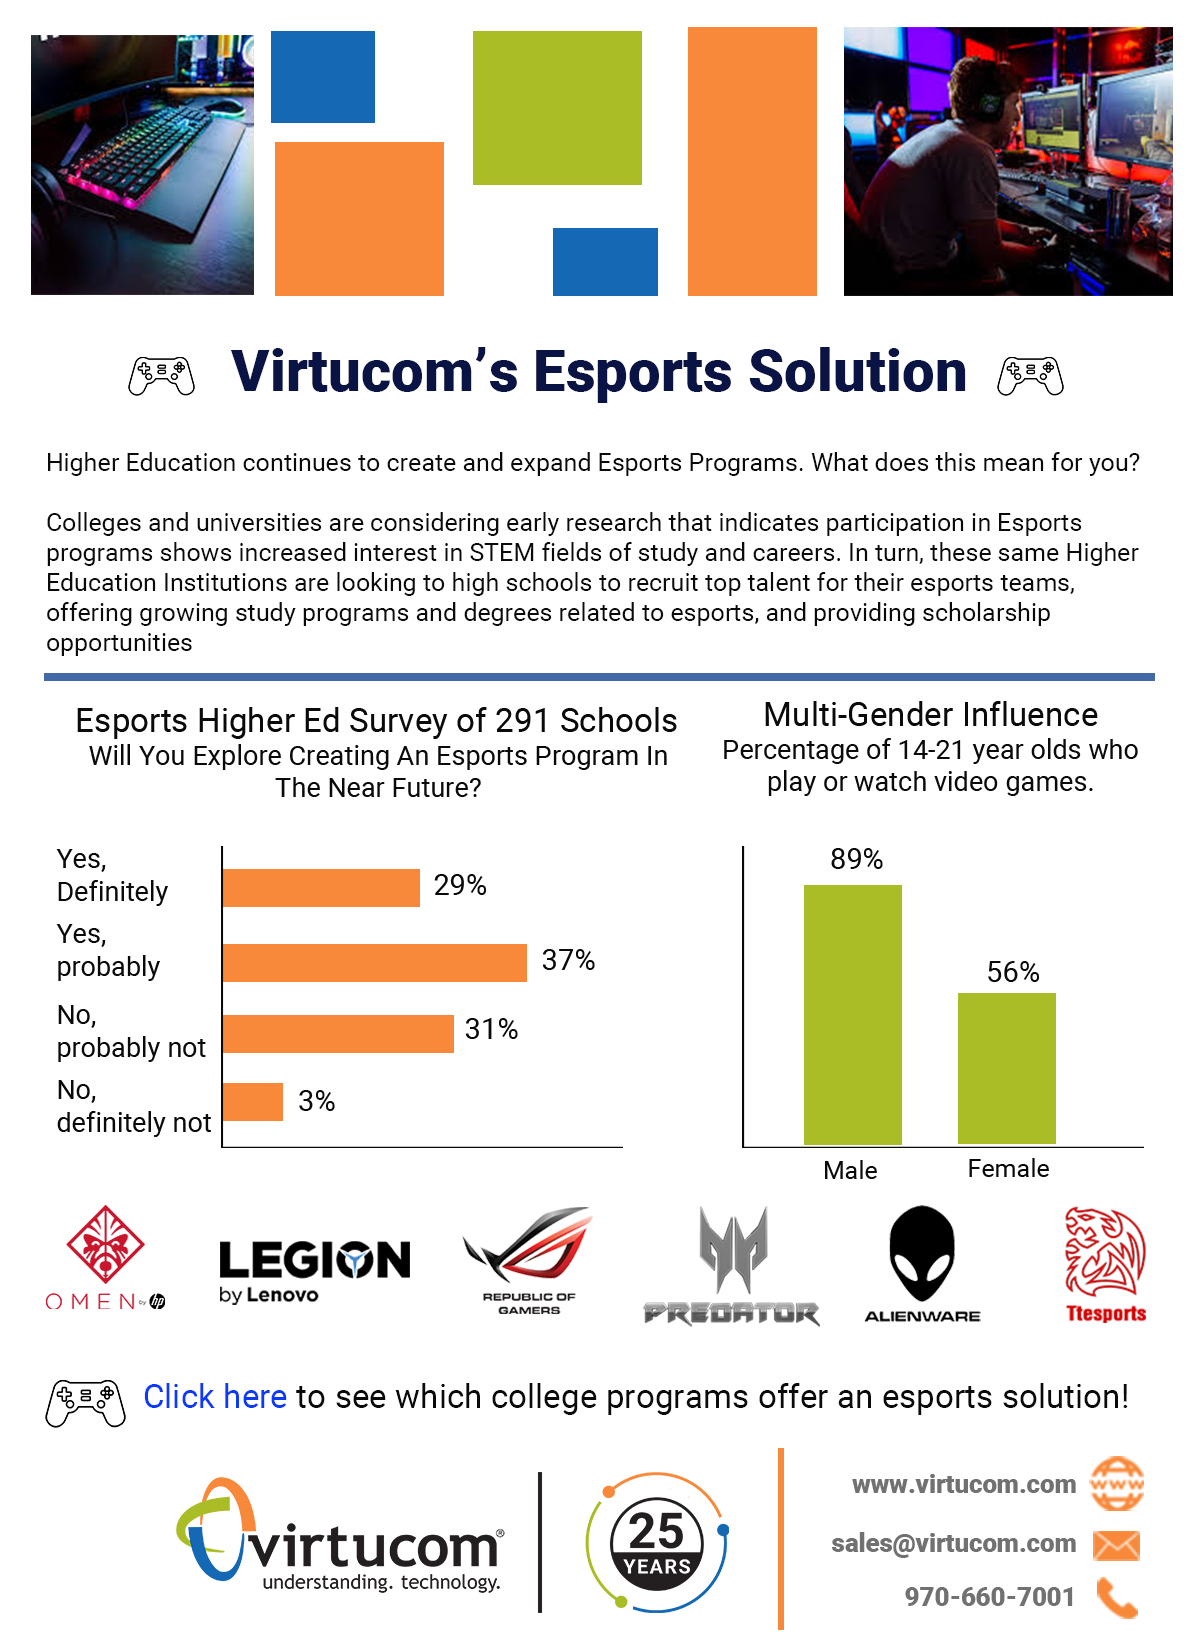 Virtucom Esports 